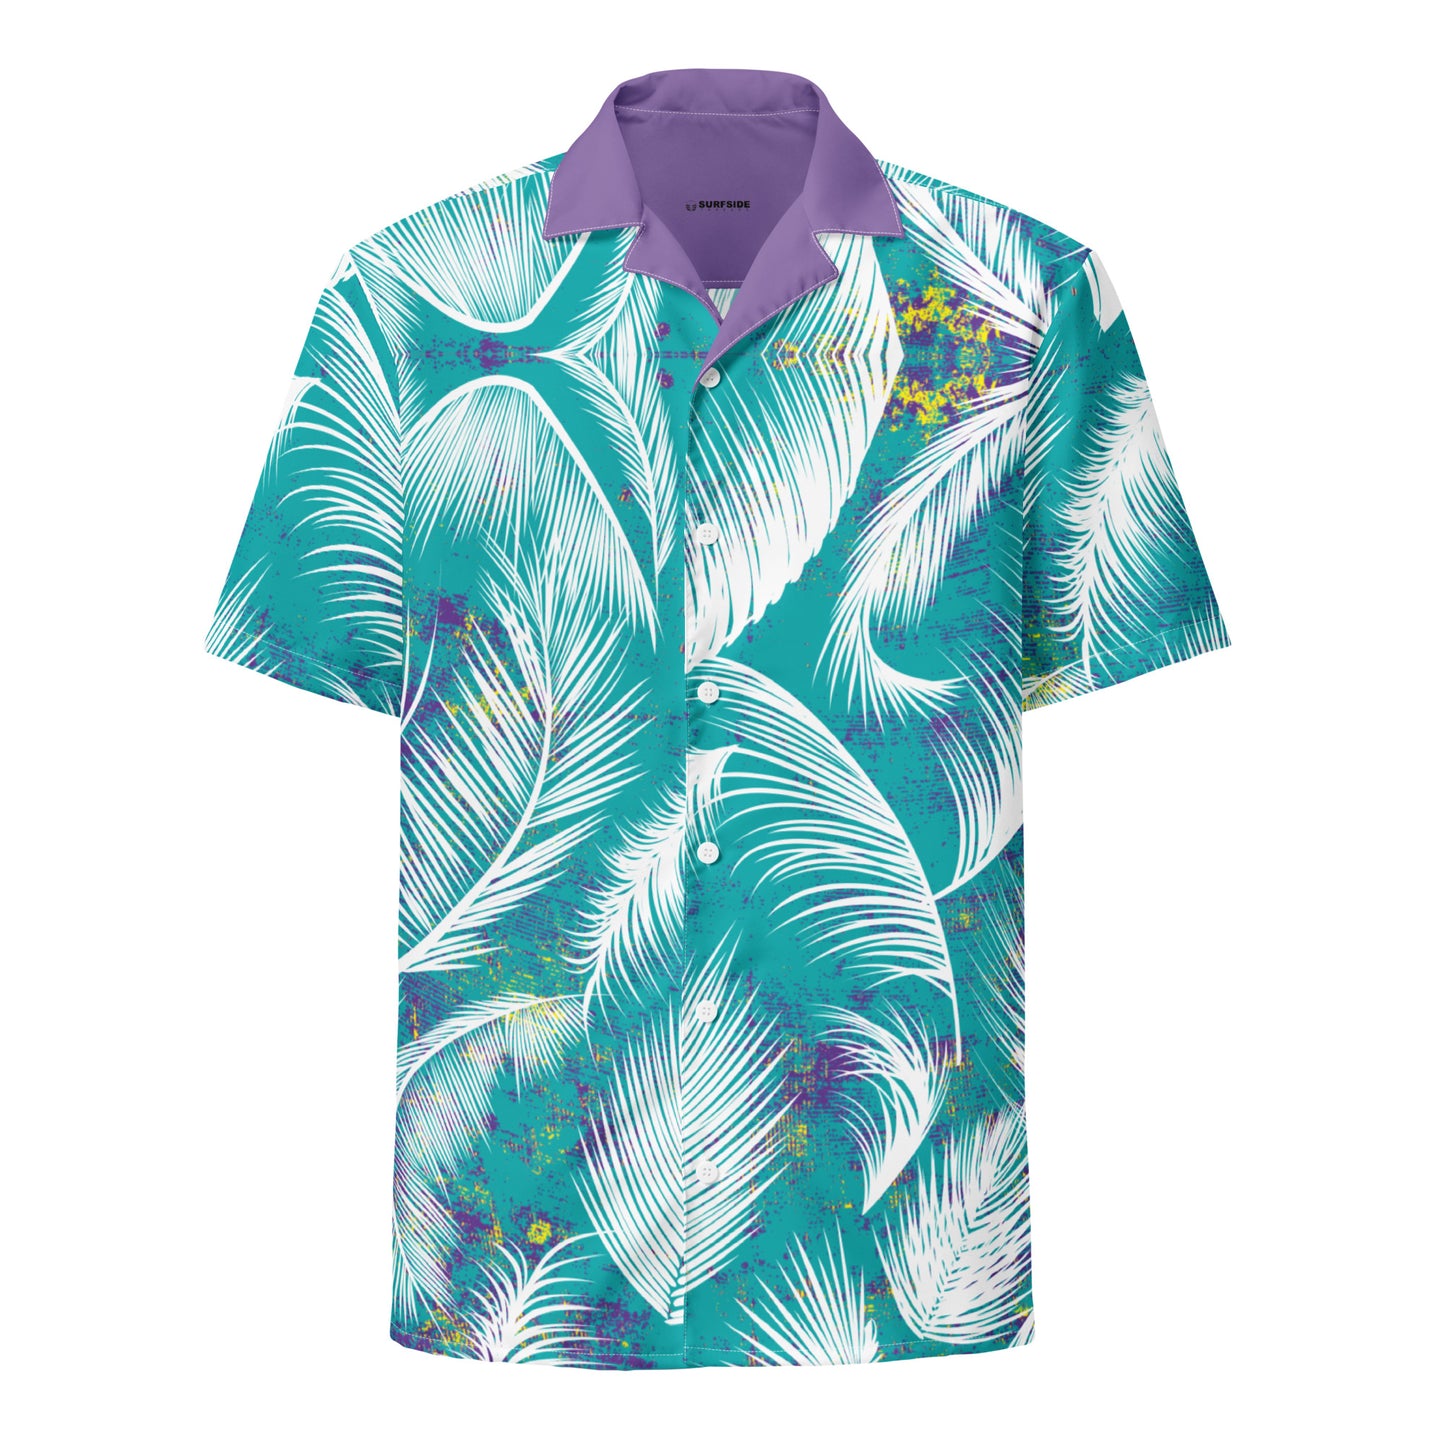 Surfside Unisex Button Down Shirt - Peacock